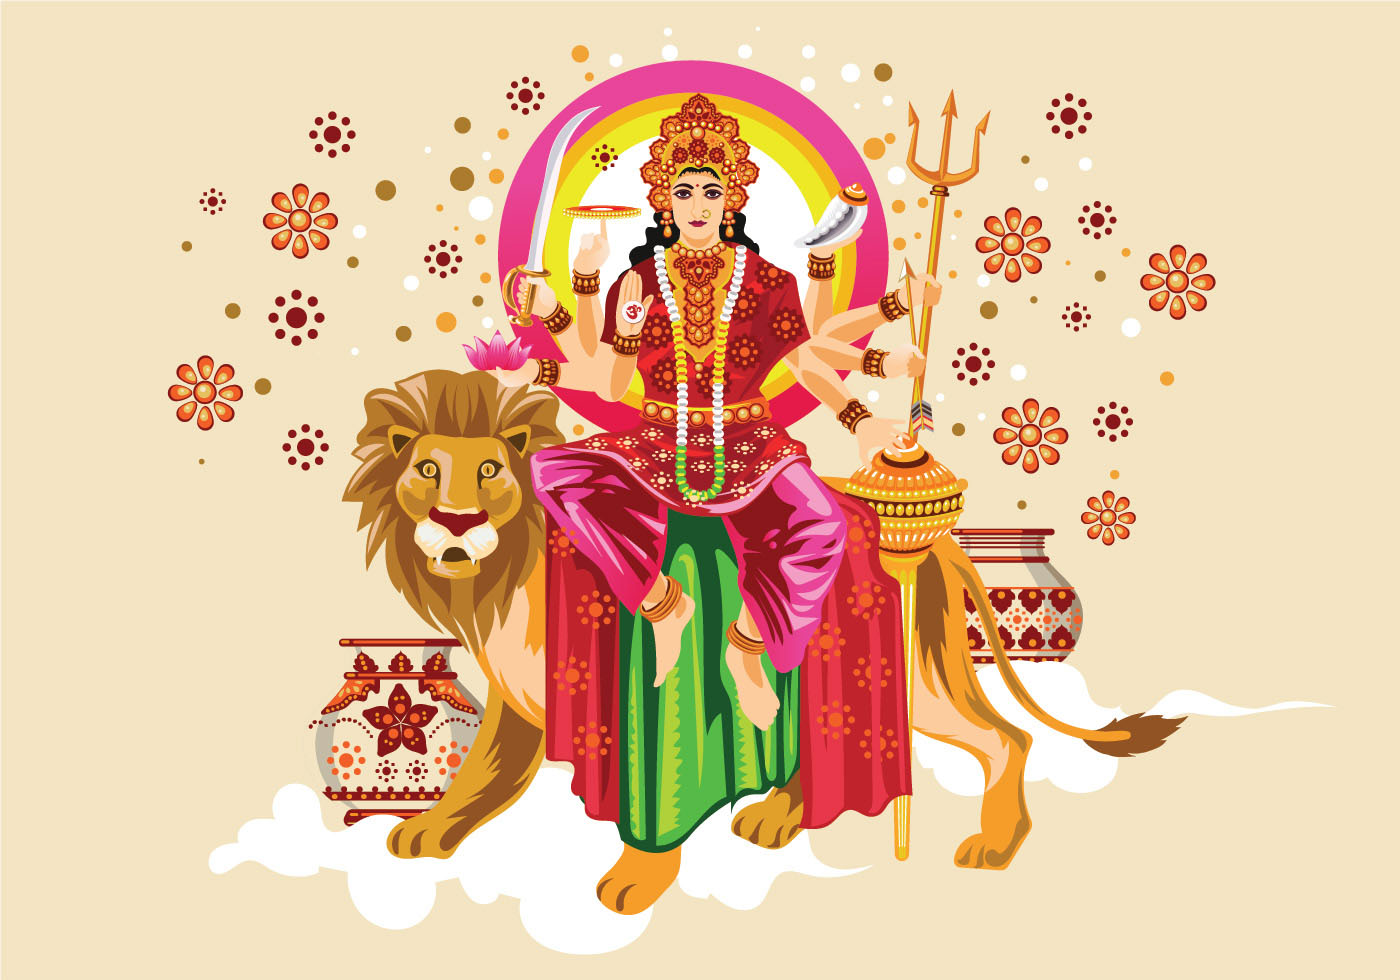 Download Vector Illustration of Goddess Durga in Subho Bijoya for free.